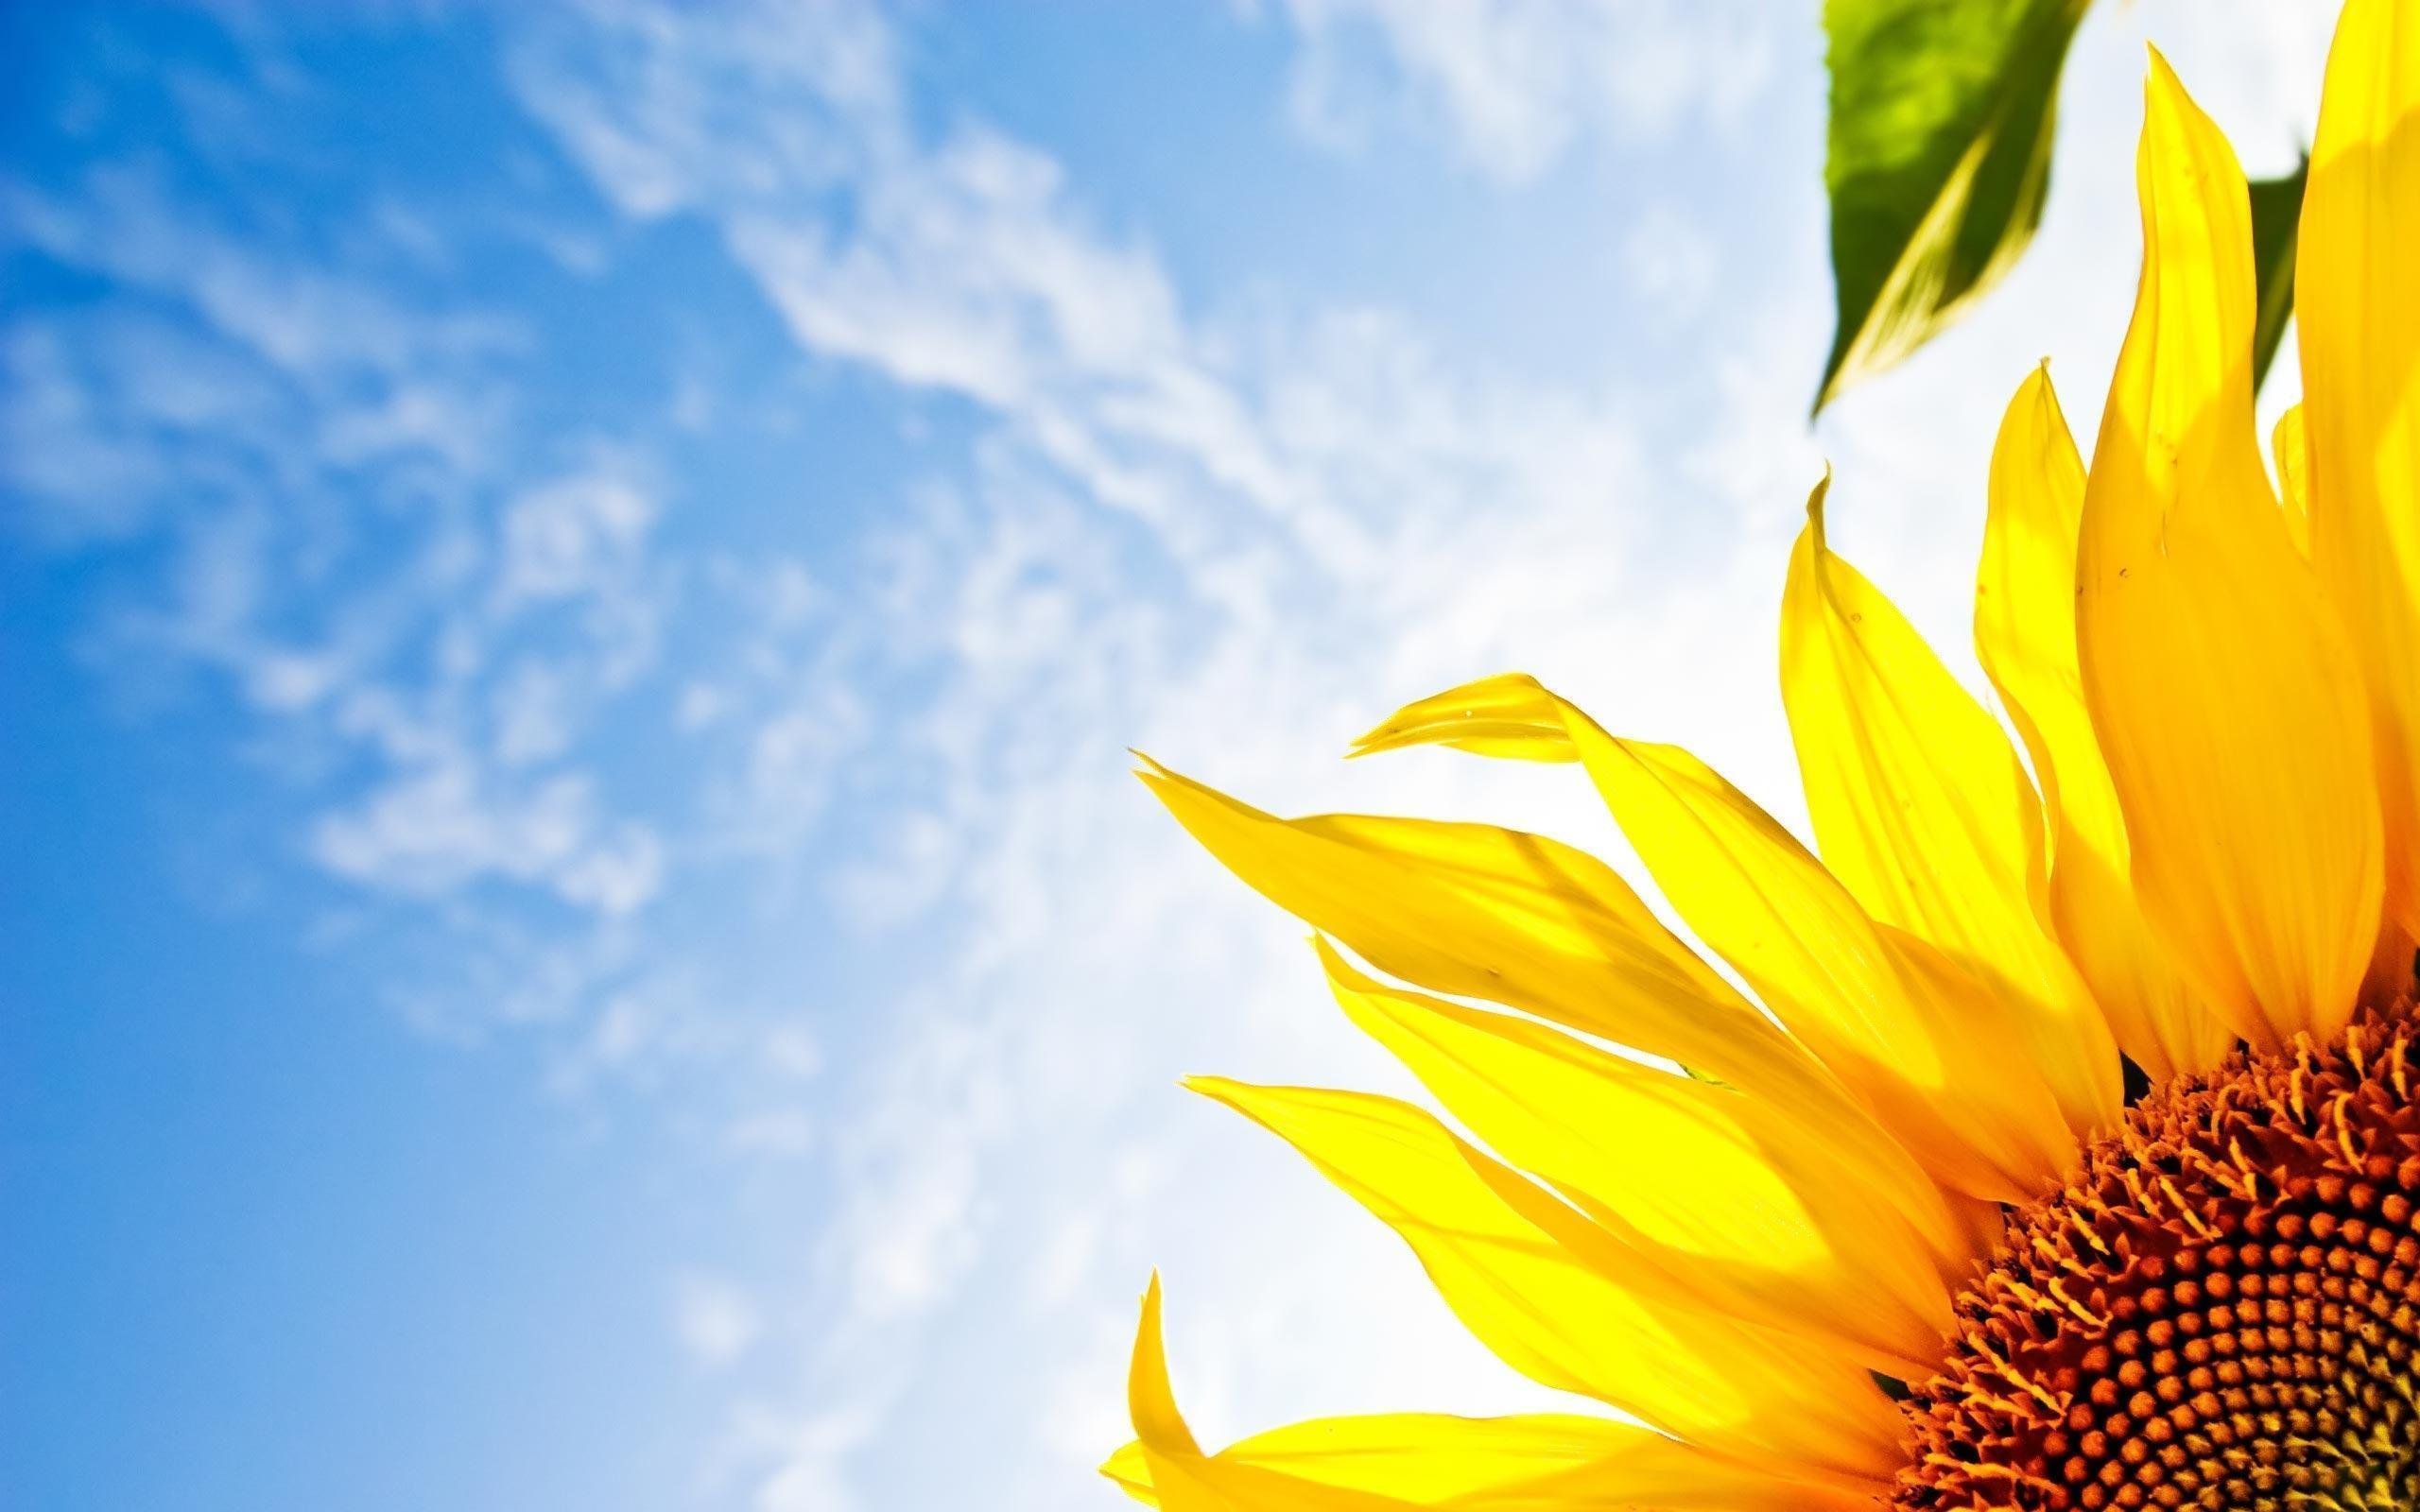 Desktop Wallpaper · Gallery · Windows 7 · Sky sunflower. Free